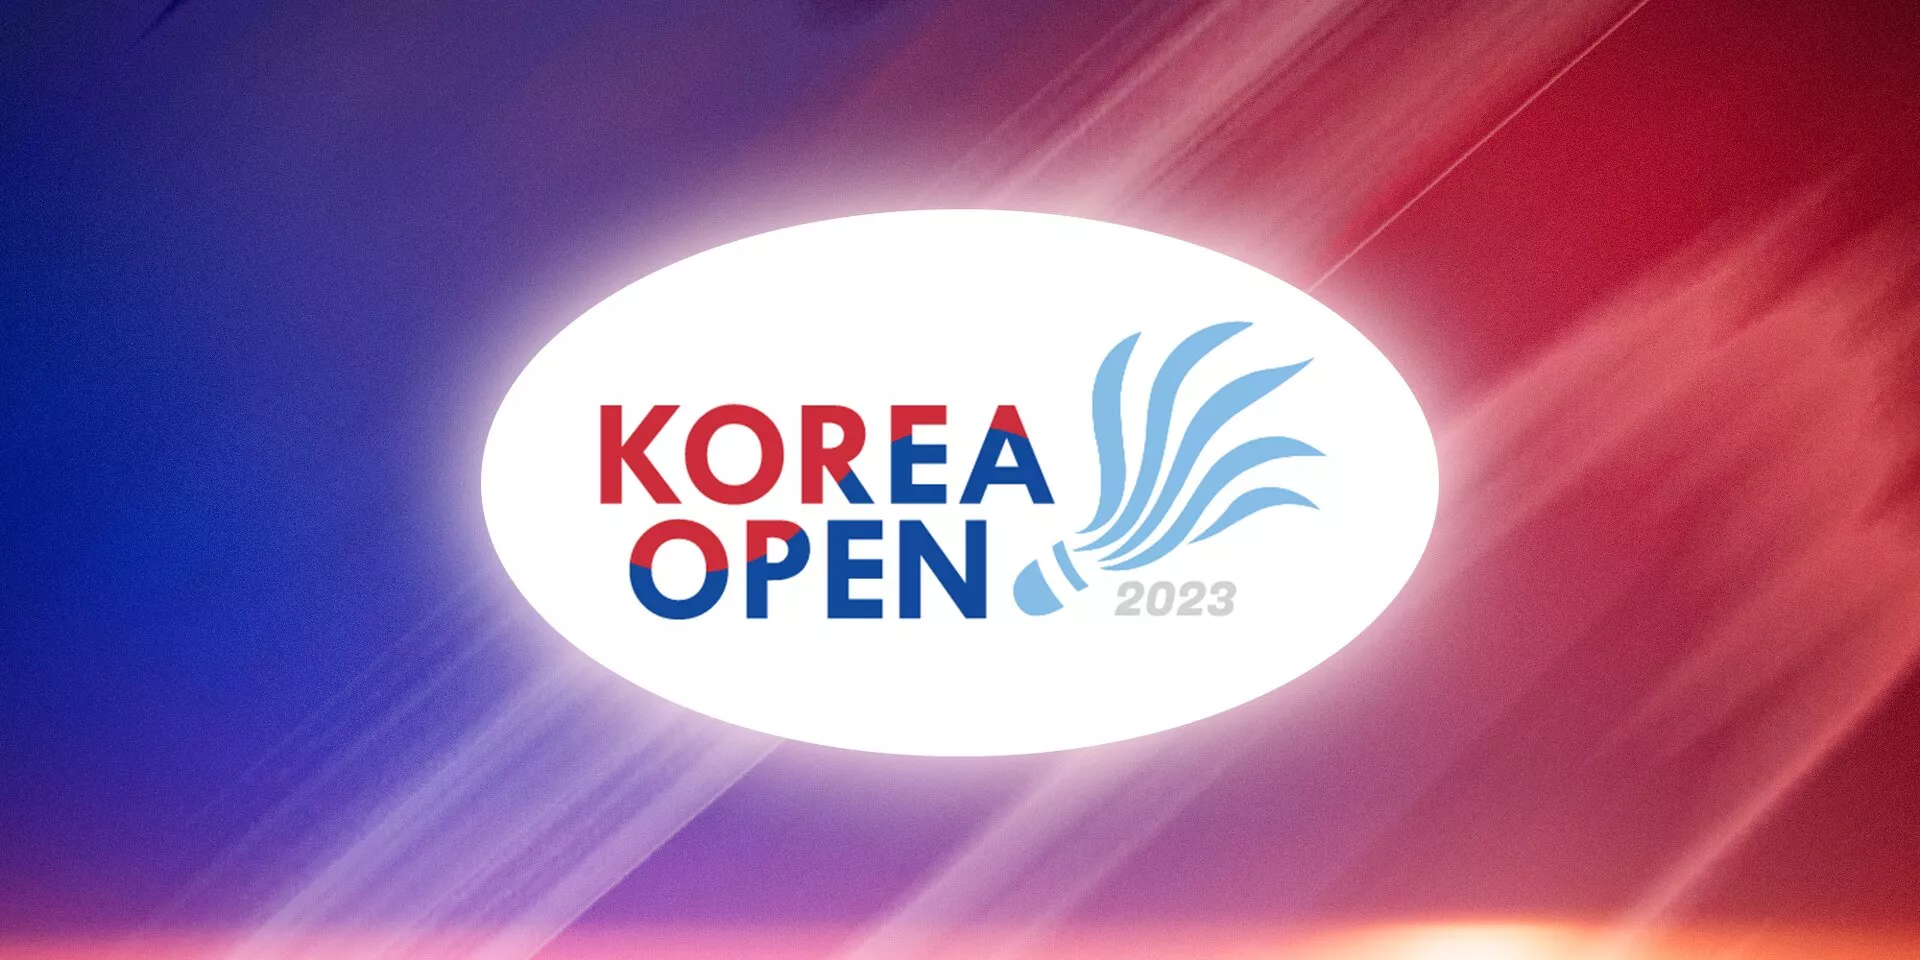 live score badminton korea